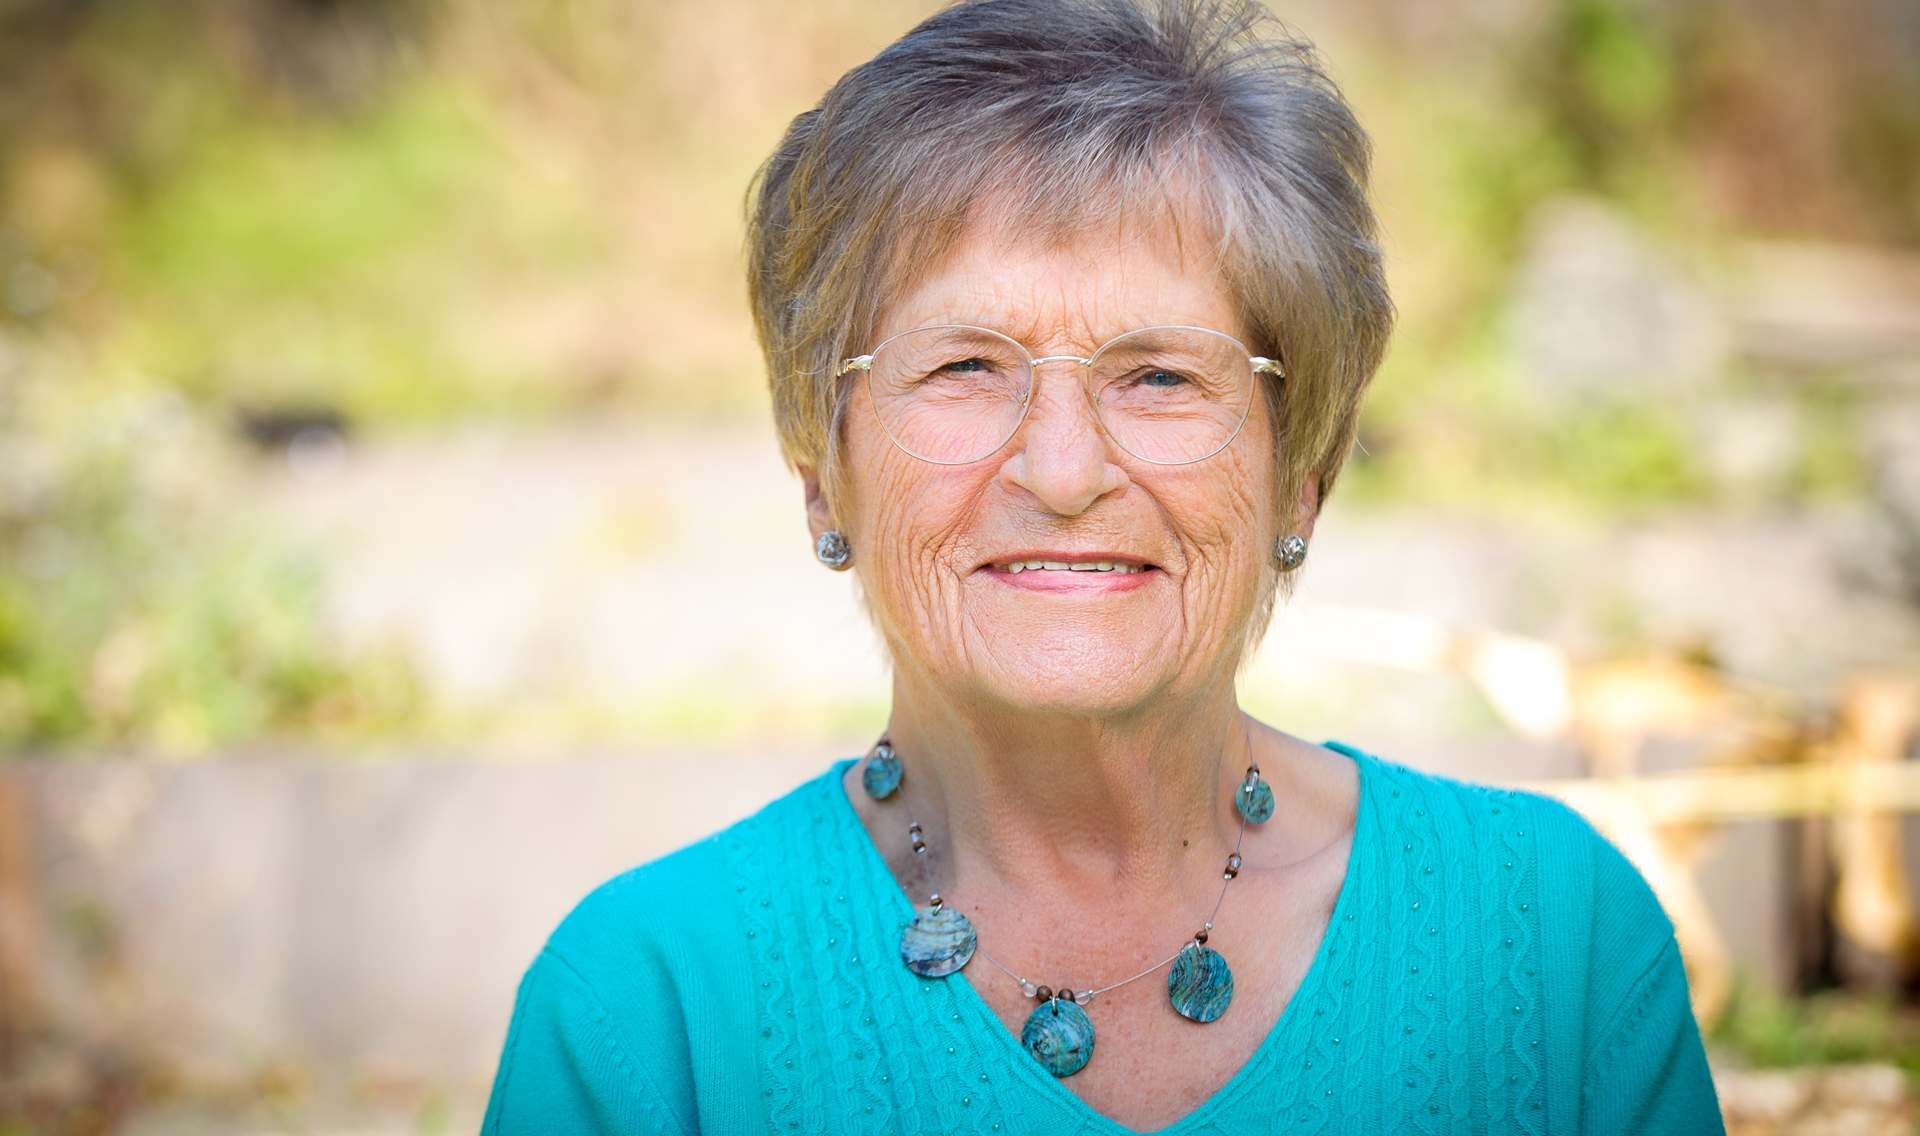 Beautiful portrait of senior grandma in the sun smiling